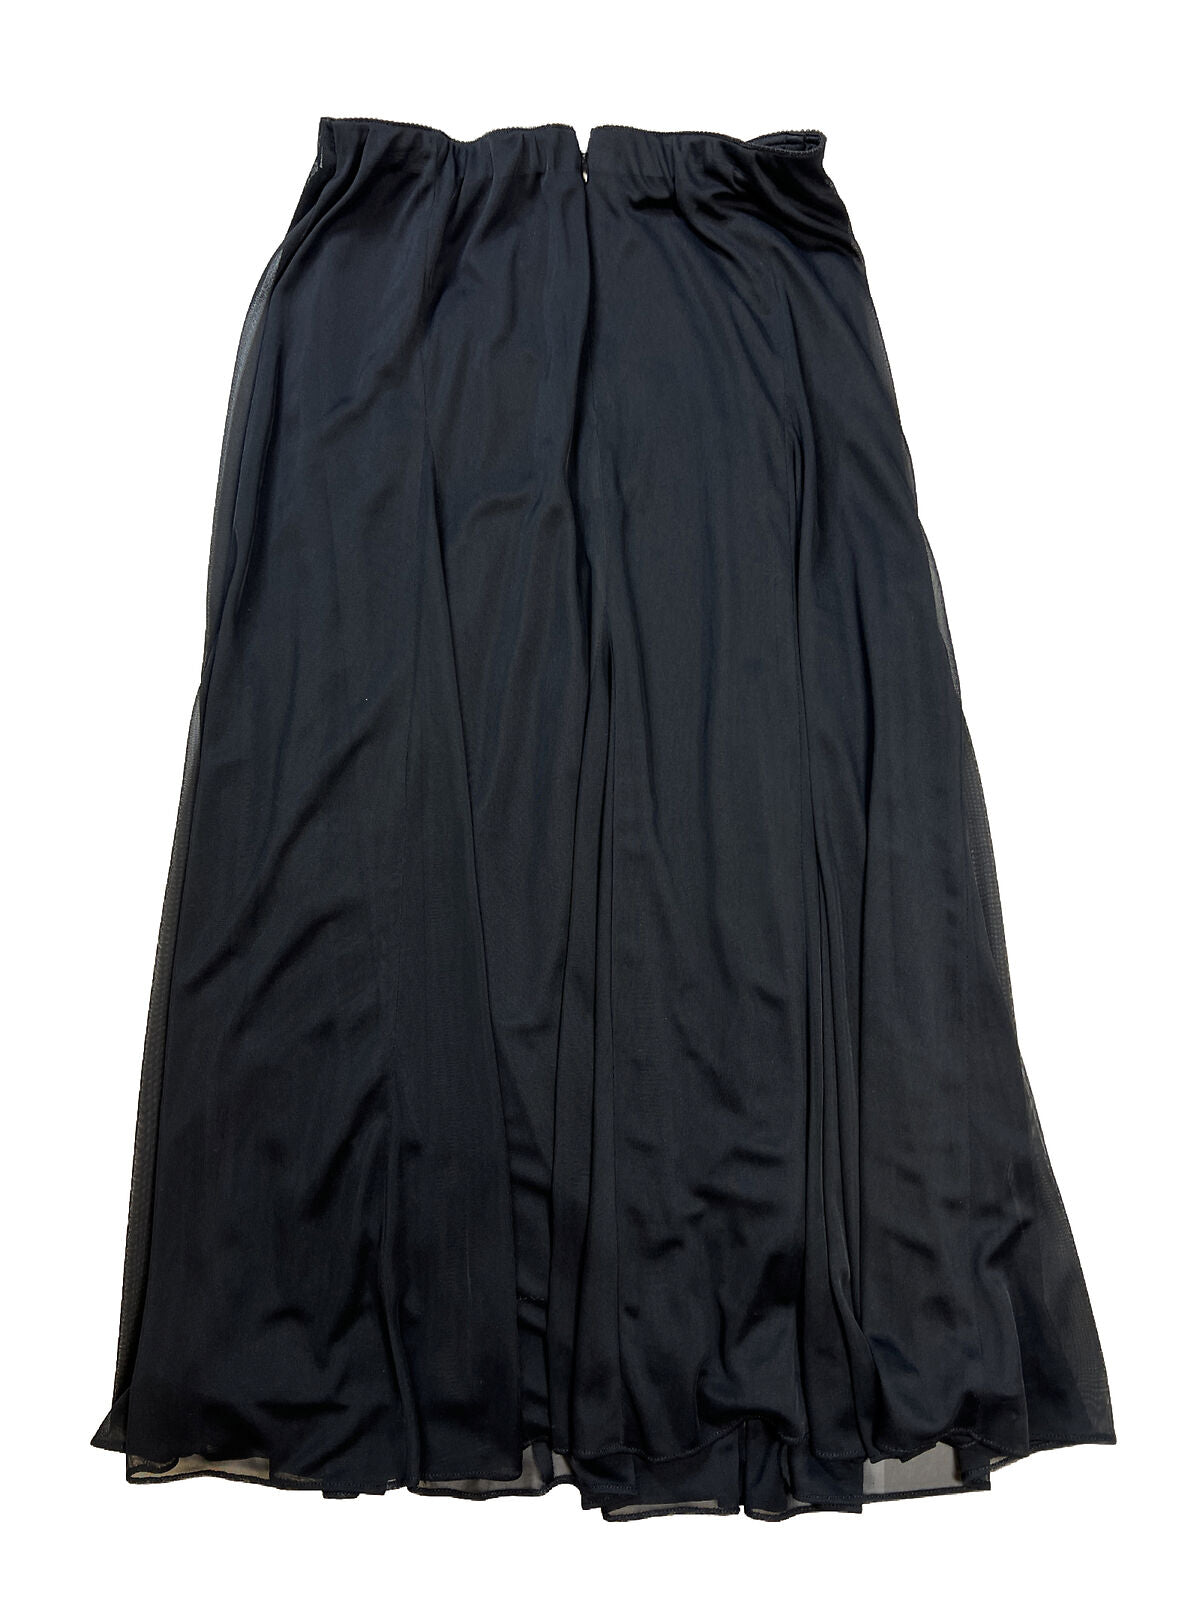 NEW Alex Evenings Women's Black Pleated Mesh Lined Midi Skirt - S